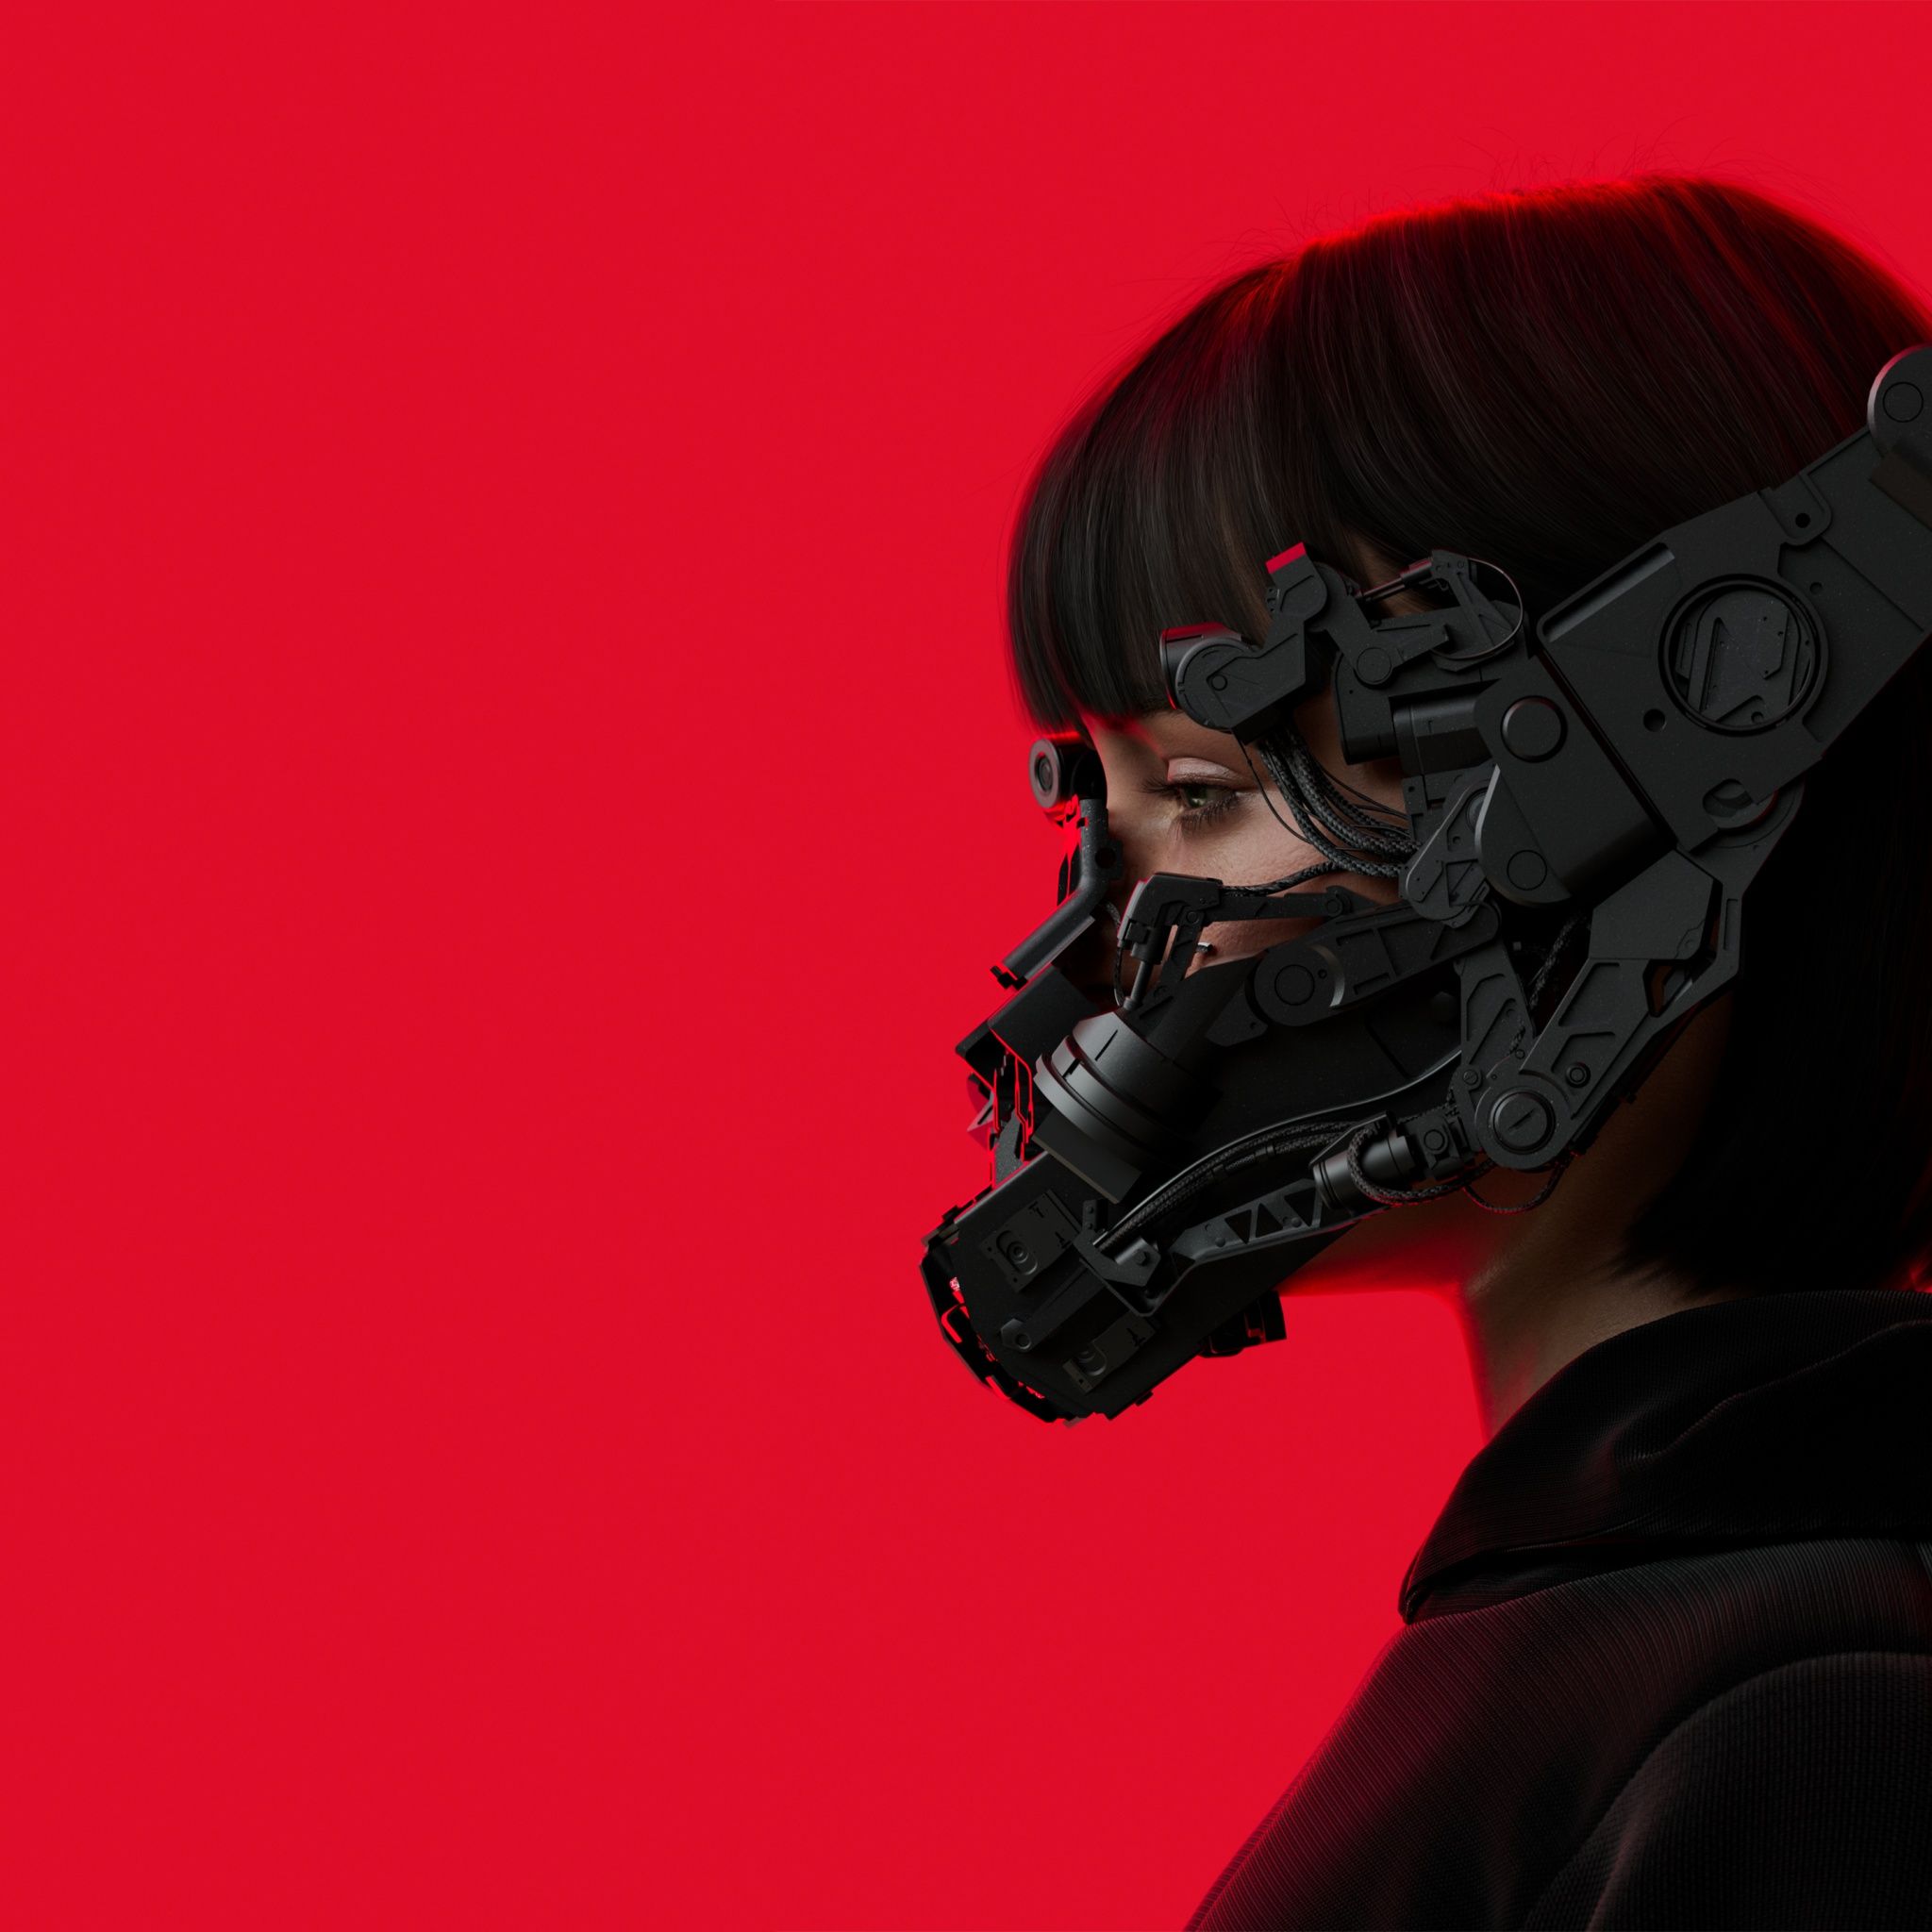 Cyberpunk Wallpaper 4K, Red Background, Girl, Sci Fi